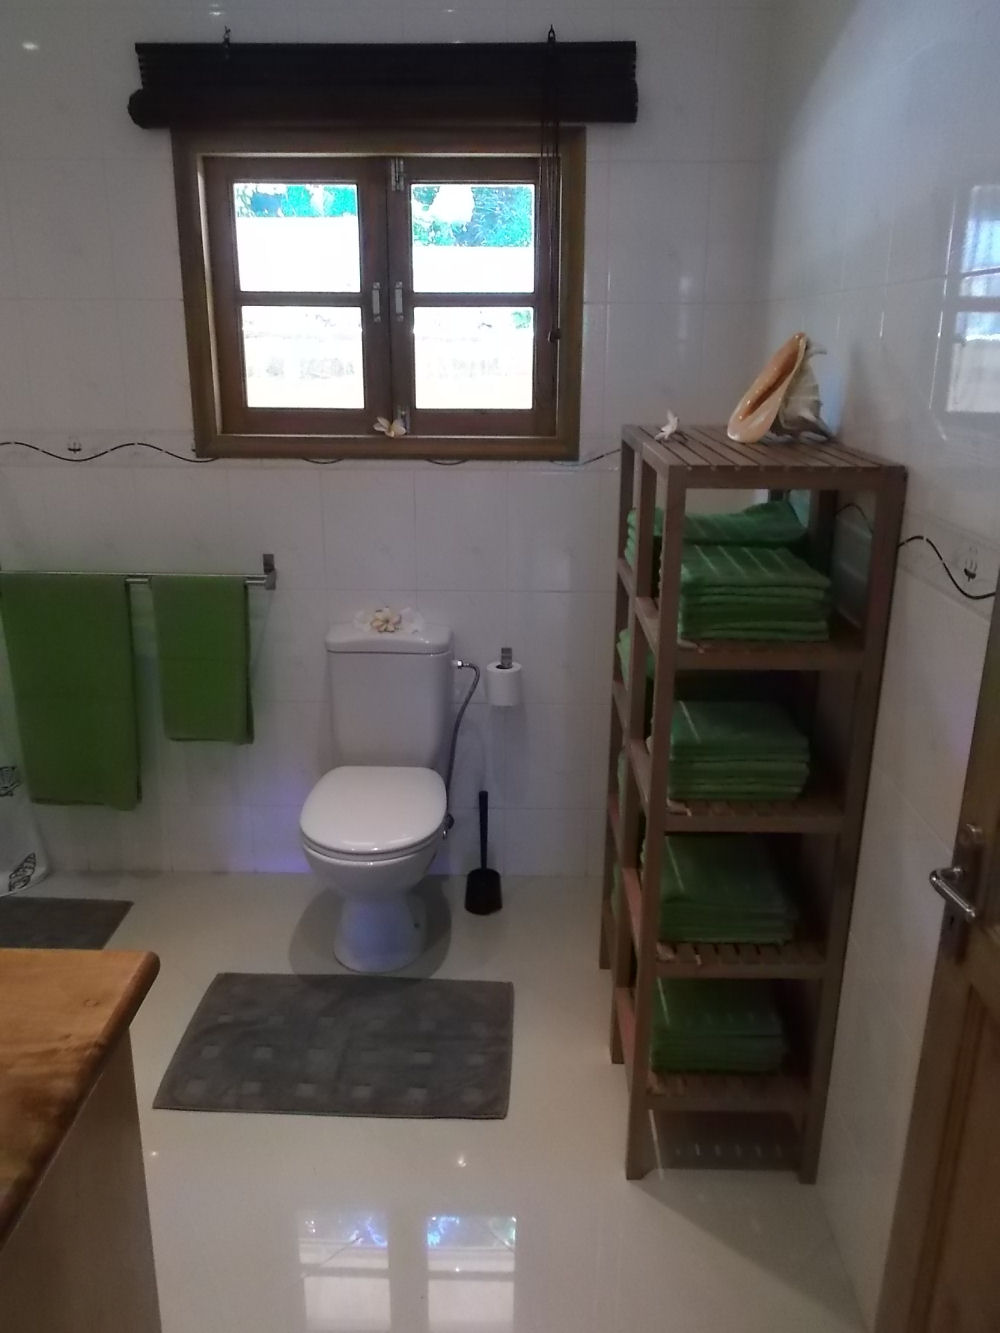 The second bathroom